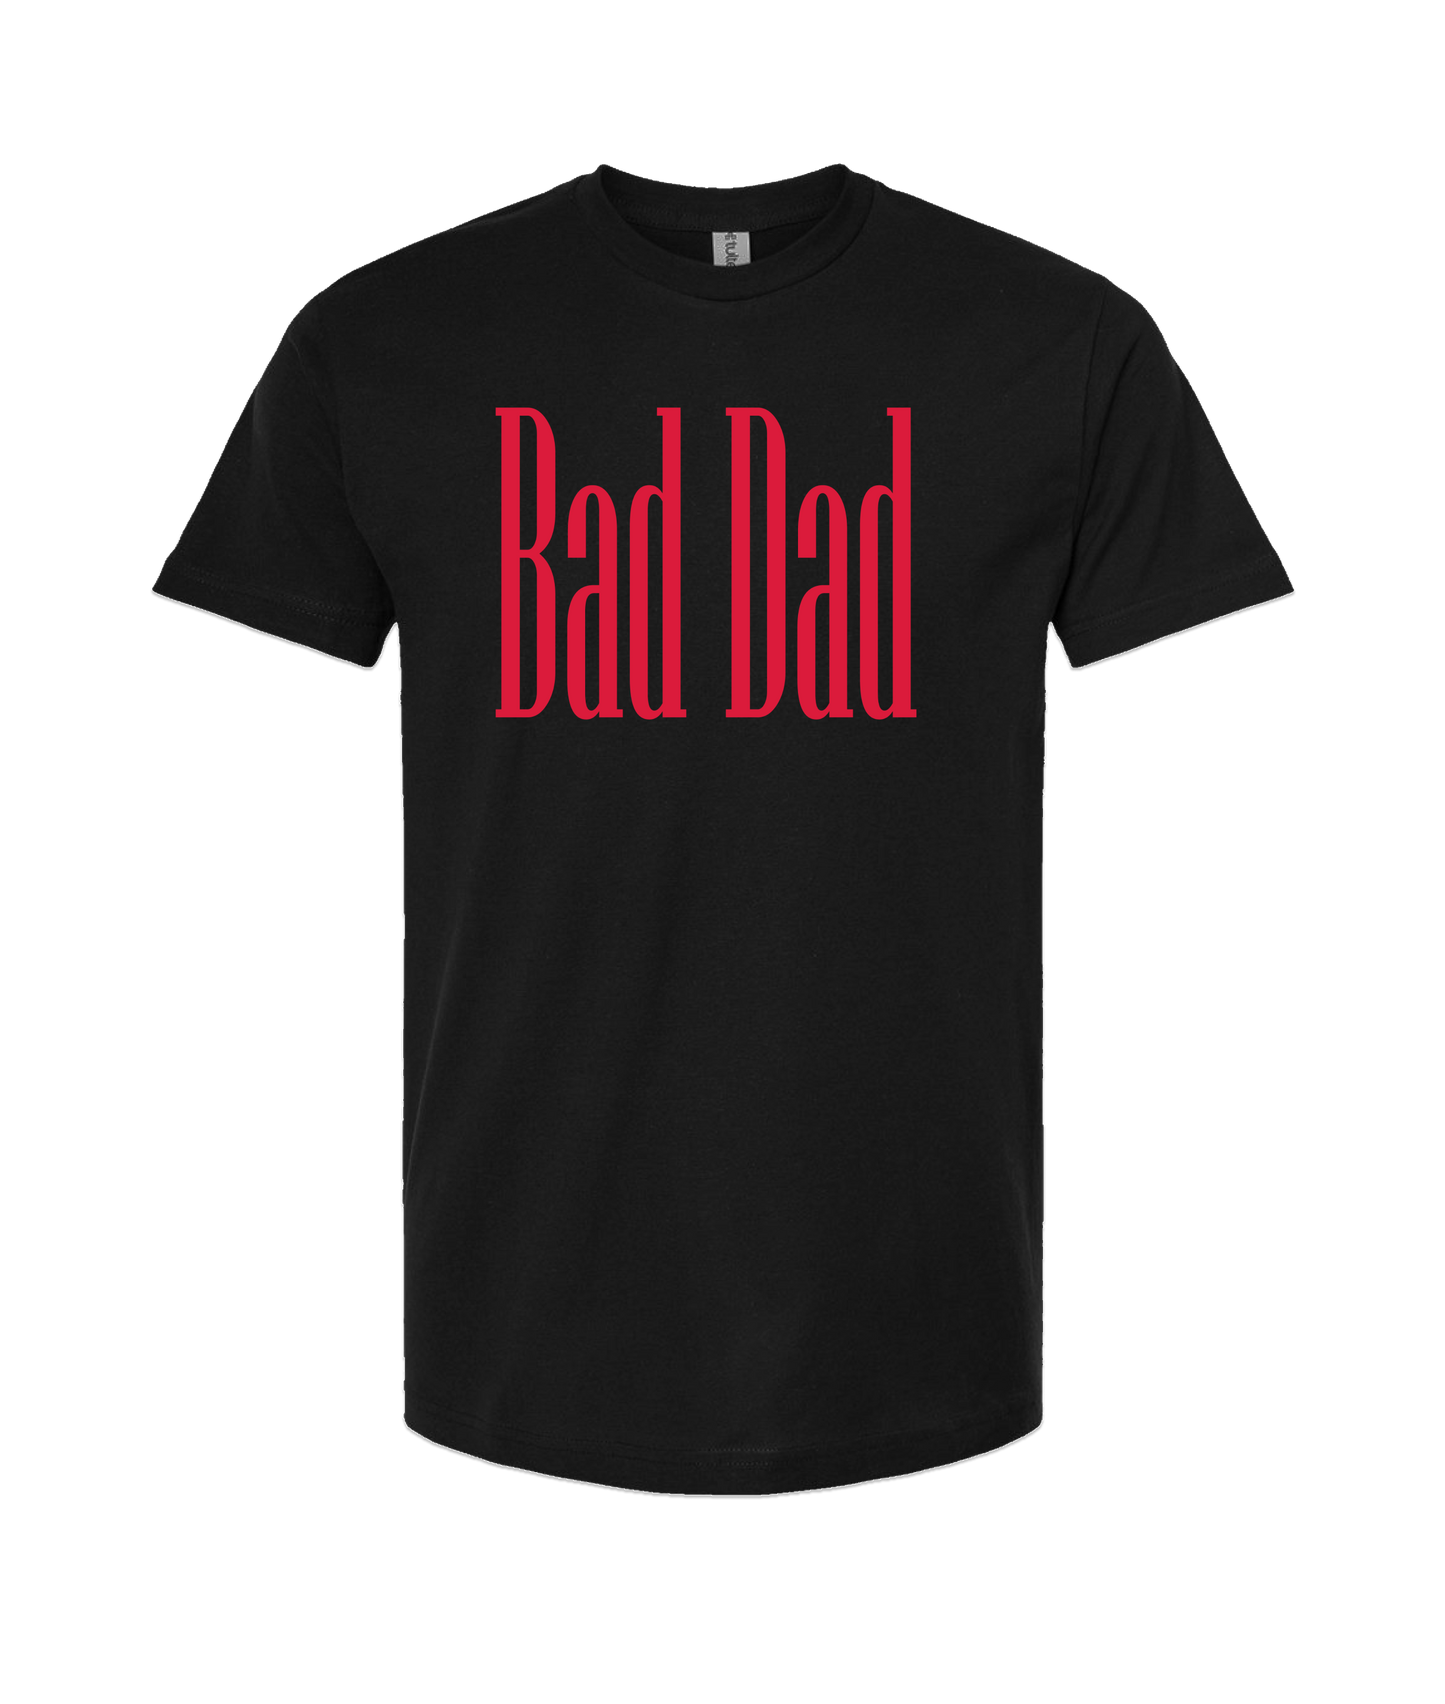 Bad Dad Guitar - Bad Dad Collection - Black T Shirt